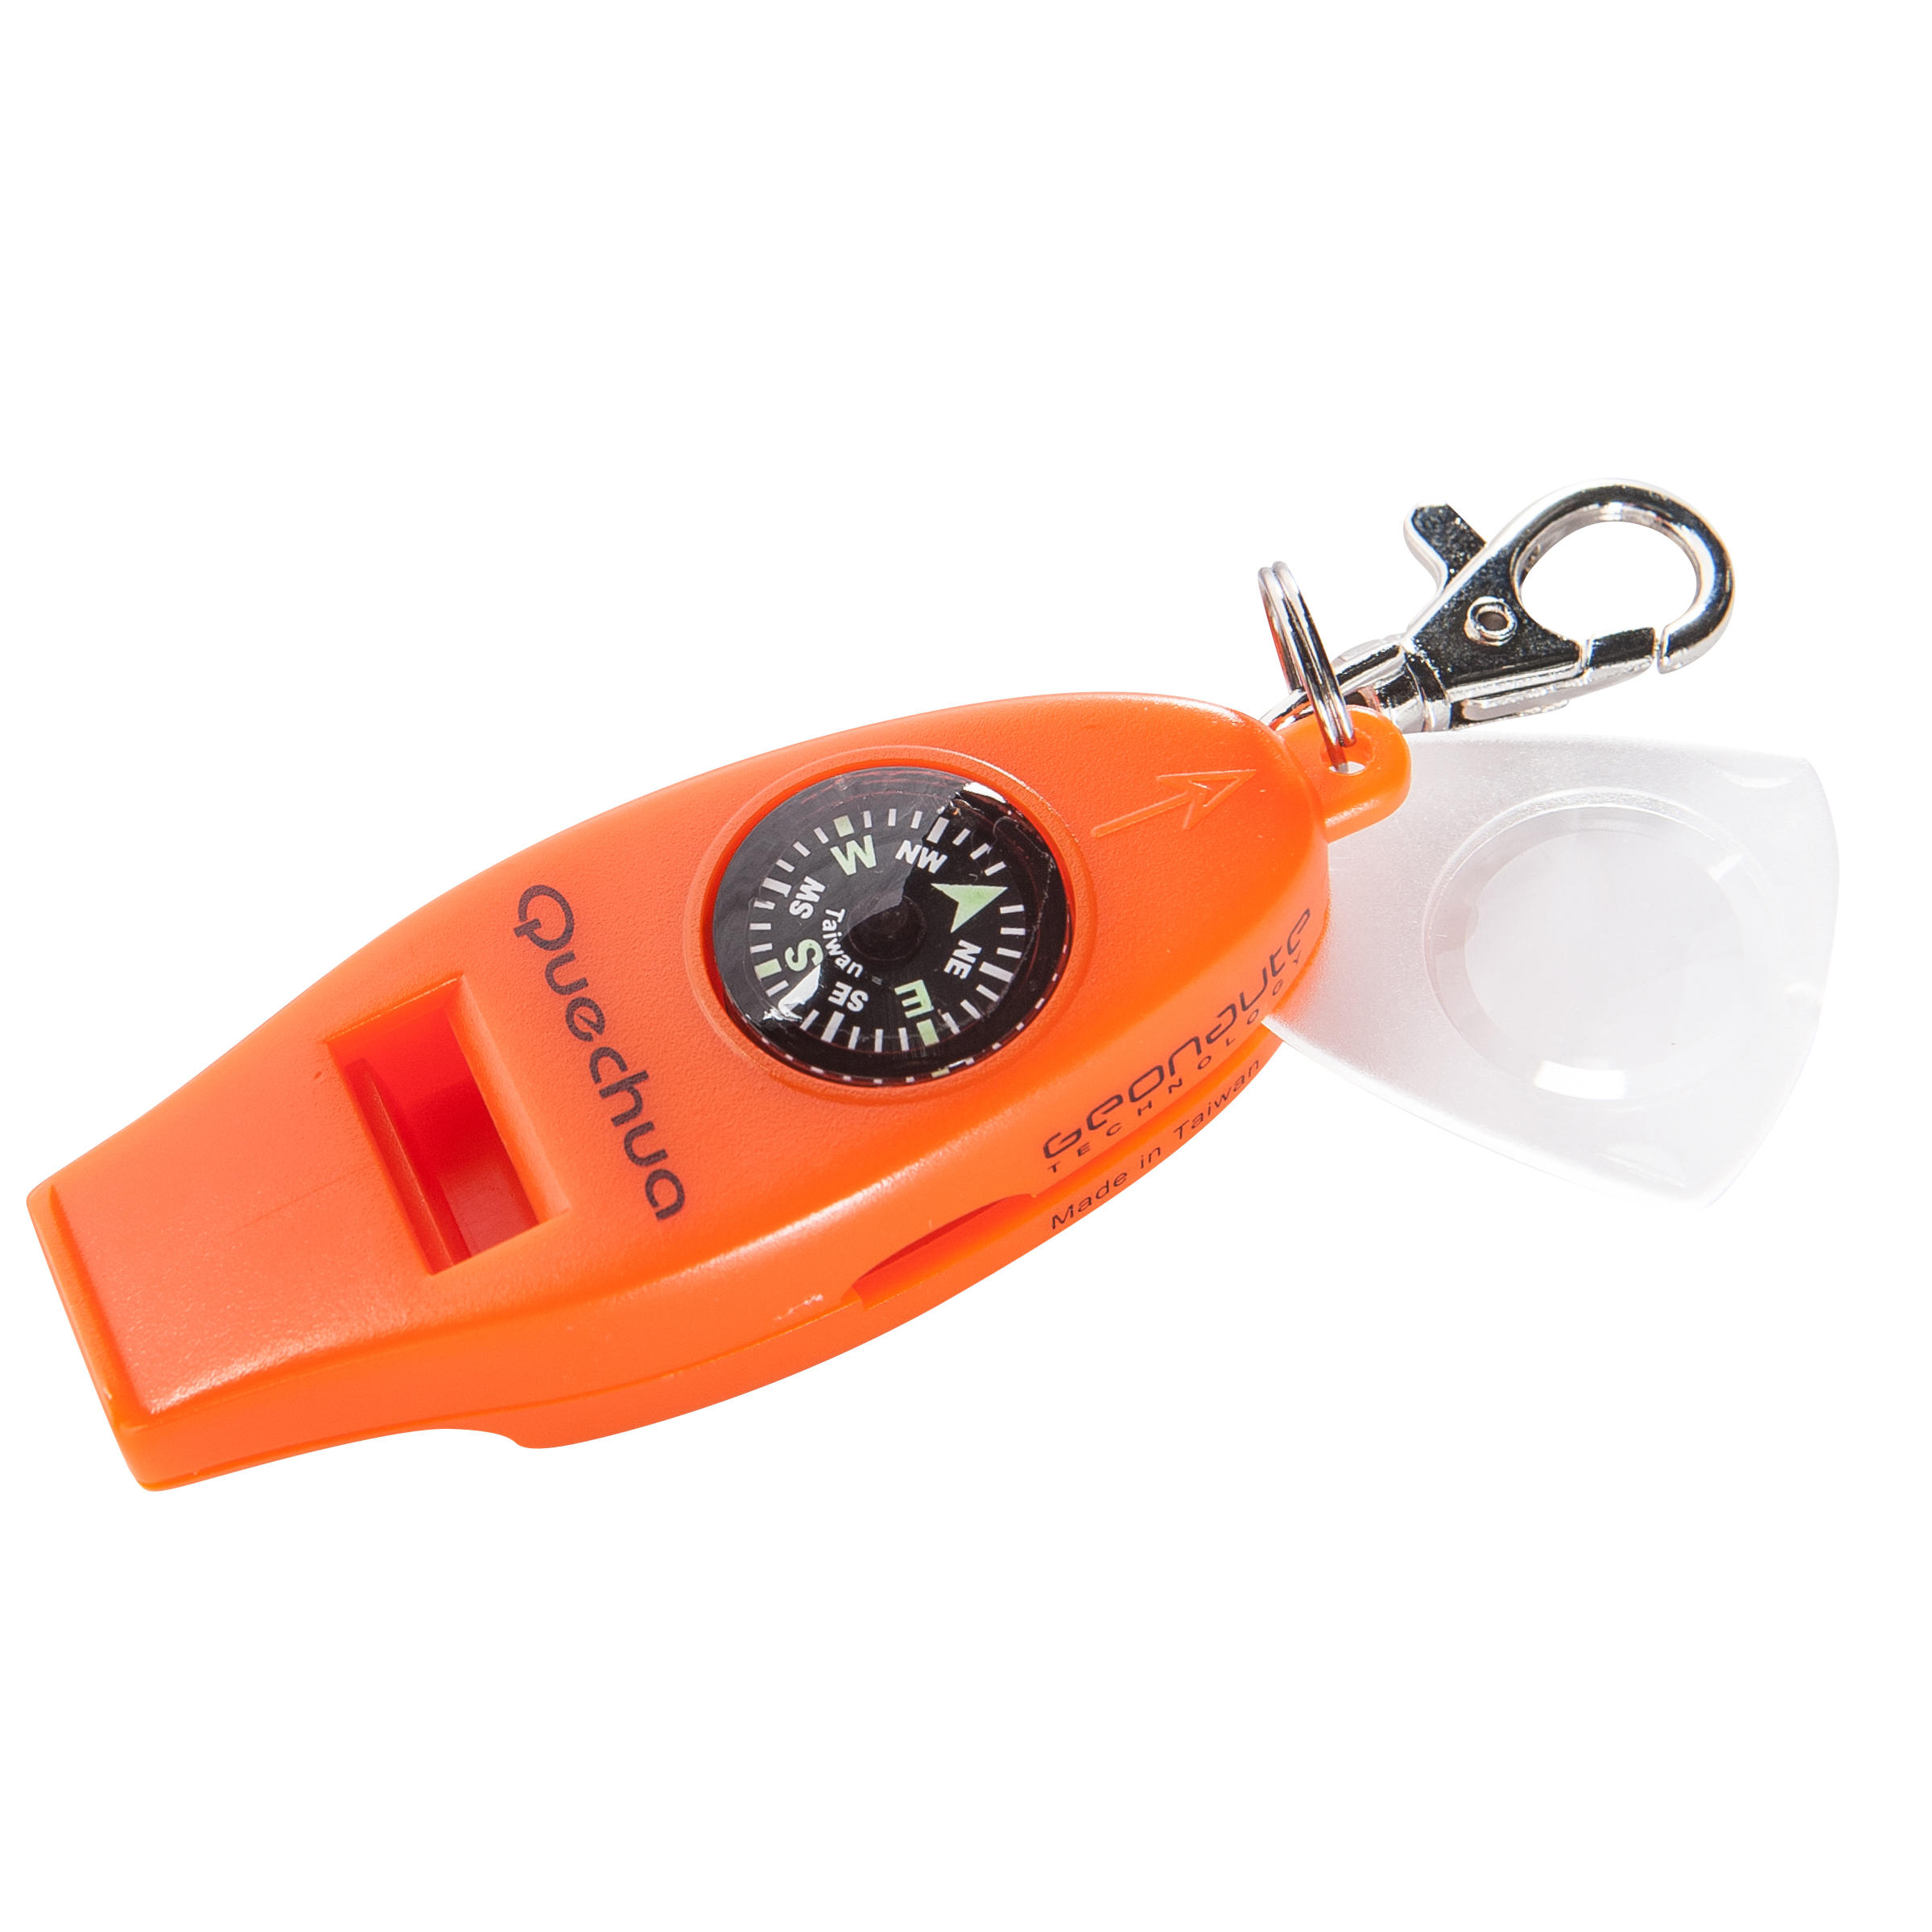 GEONAUTE WM QUECHUA 100 multi-purpose whistle compass